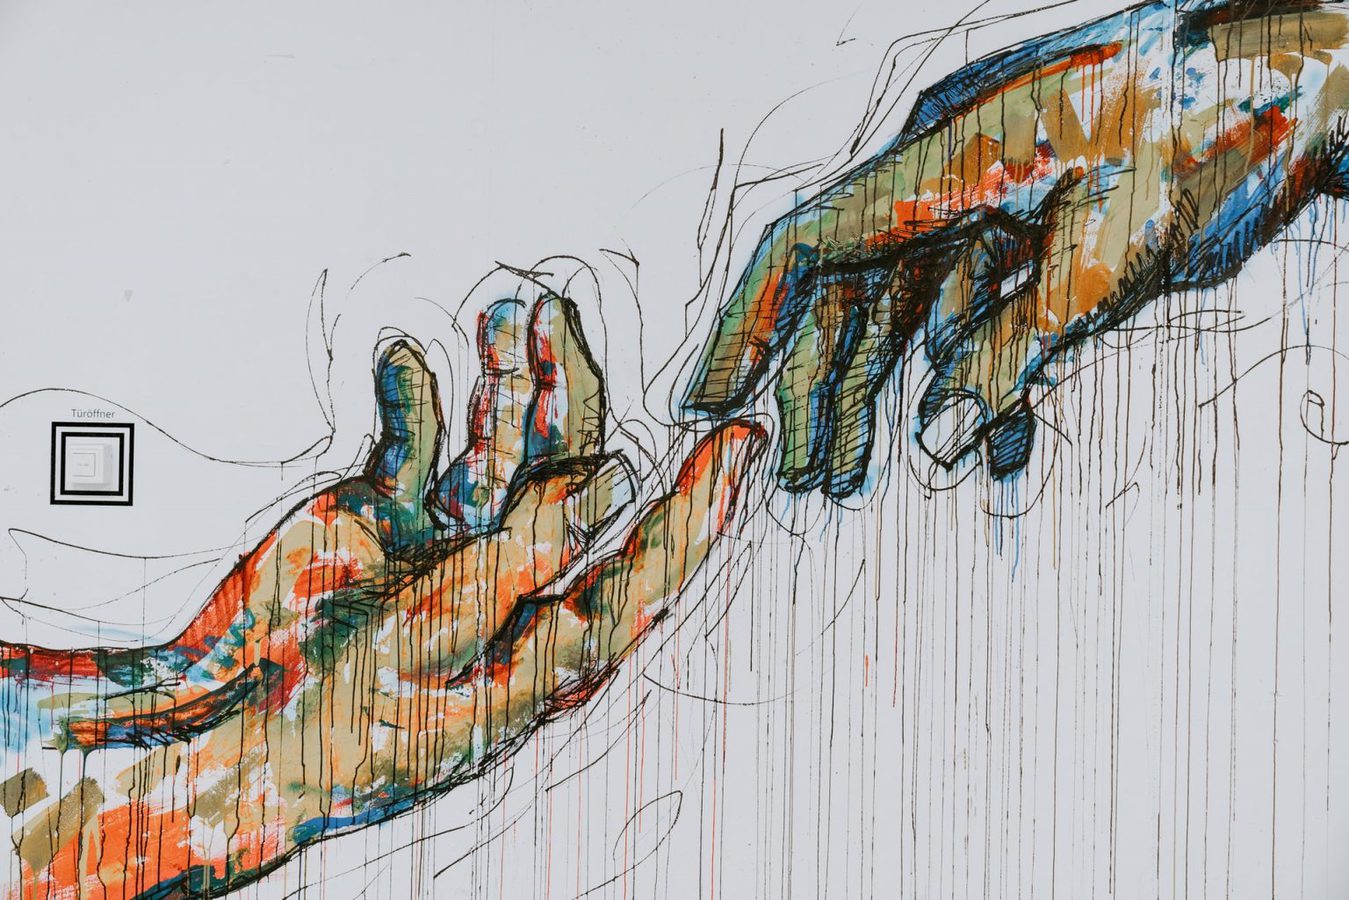 Touch Painting de Davinci como un colorido graffiti